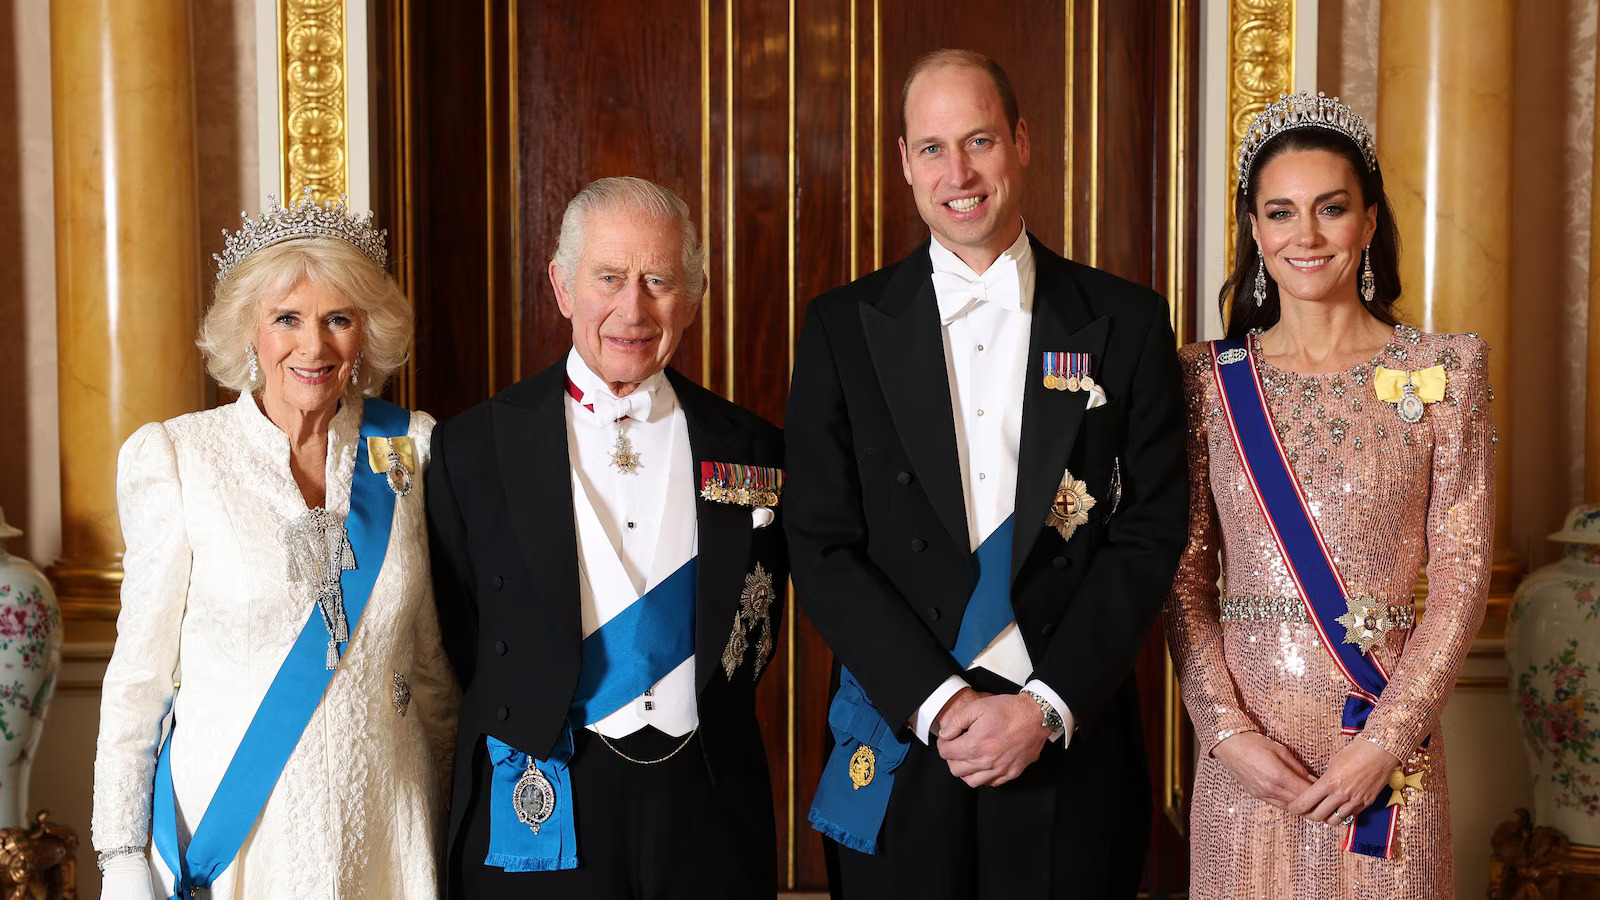 Royal family faces strain as Prince Charles resumes public duties (Credits: ABC News)